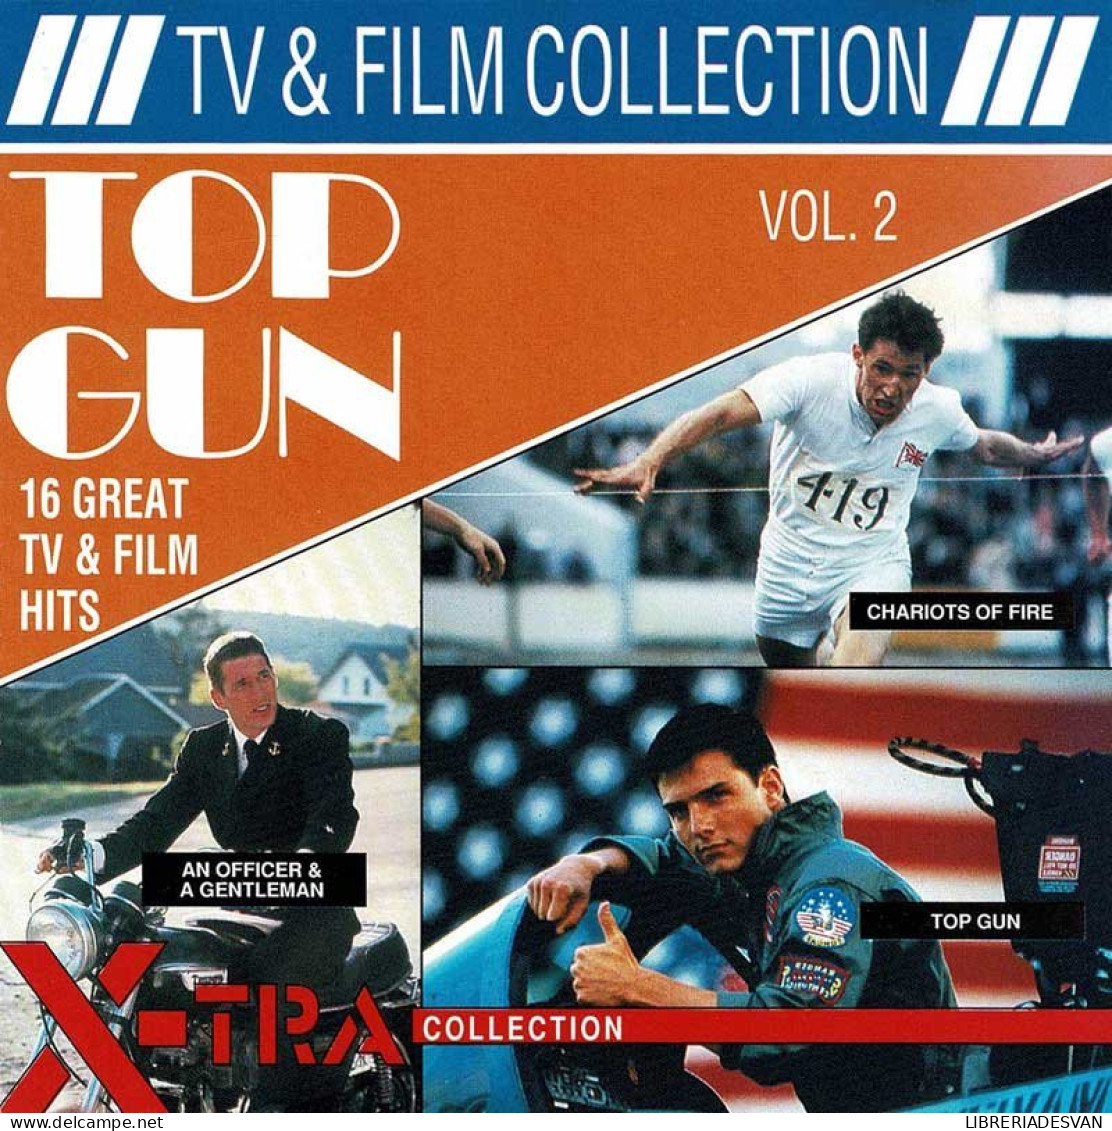 TV & Film Collection Vol. 2 - Top Gun. CD - Musica Di Film